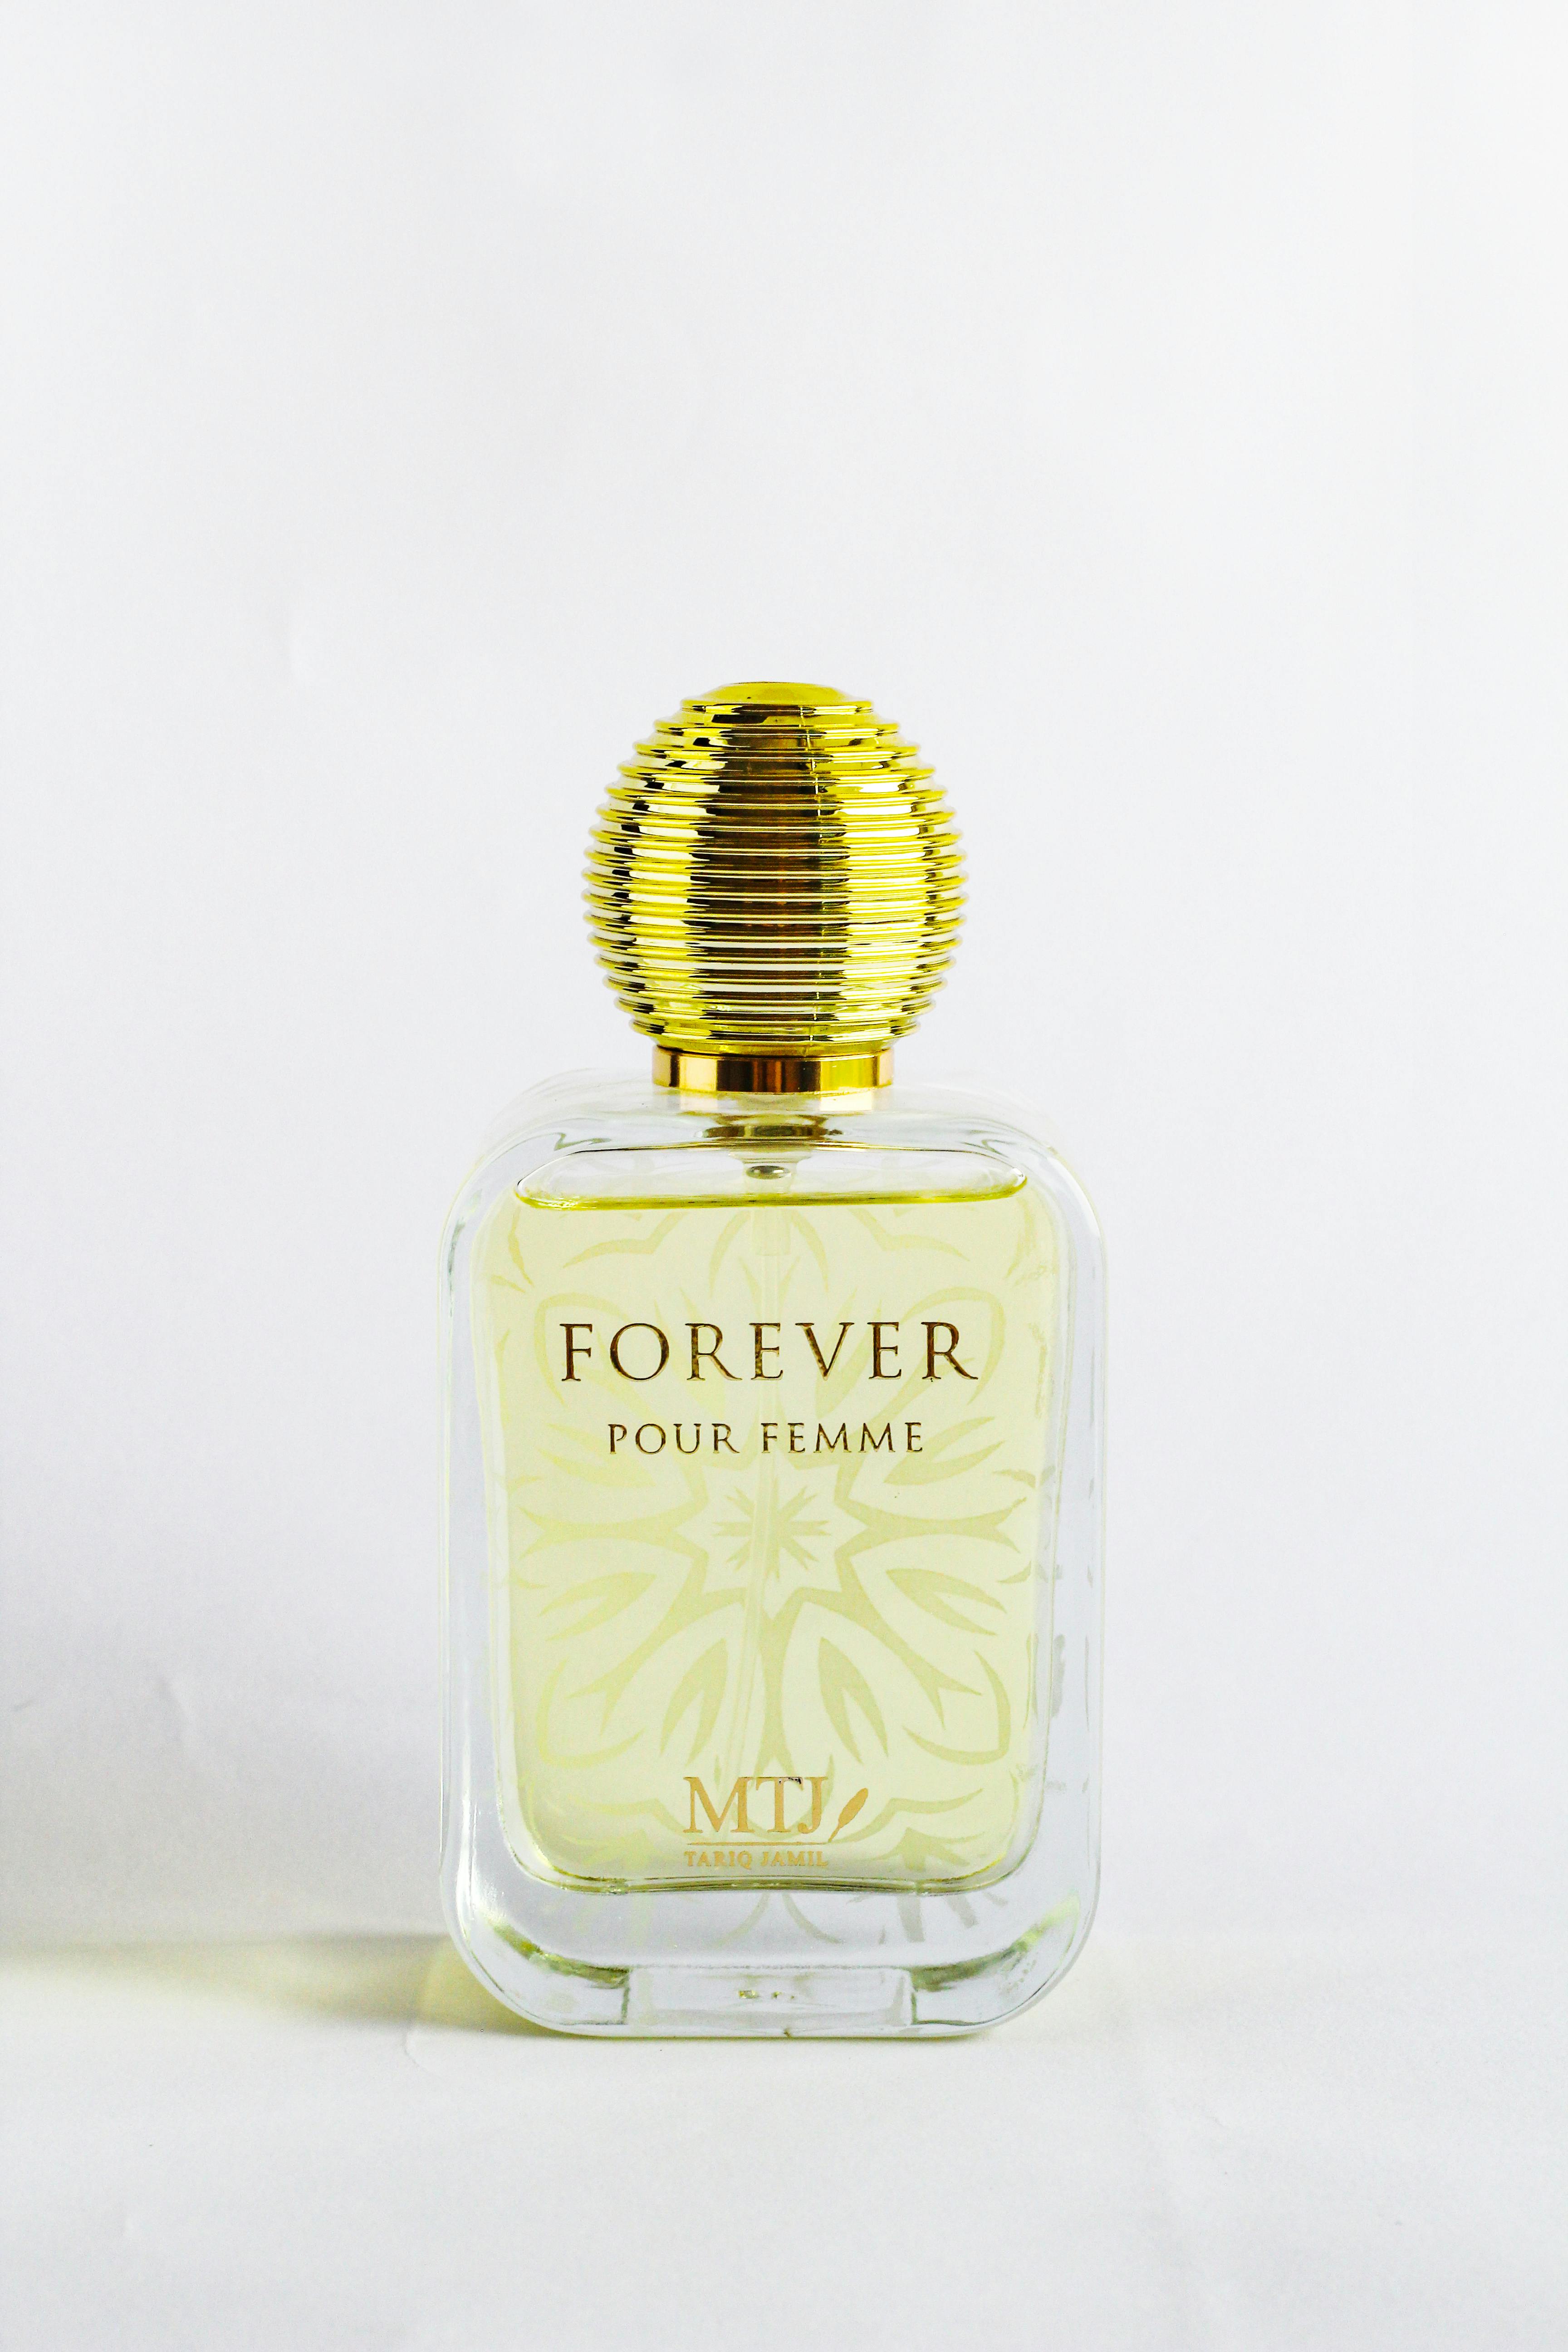 Square Glass Perfume Bottle on White Sand · Free Stock Photo